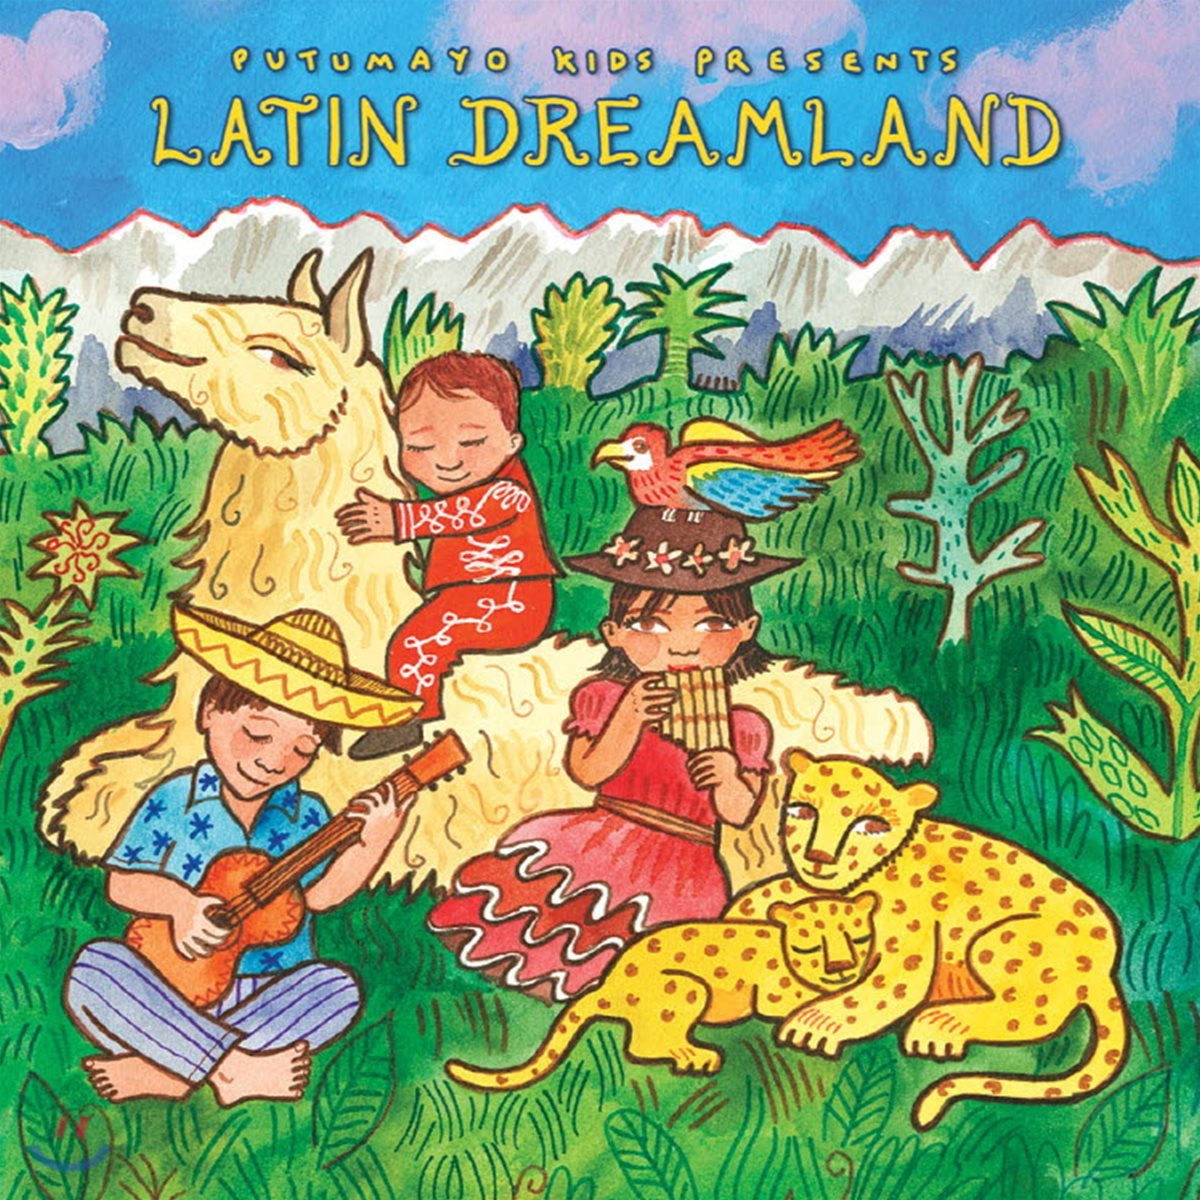 Putumayo Kids Presents Latin Dreamland (푸투마요 키즈 프레젠트 라틴 드림랜드)